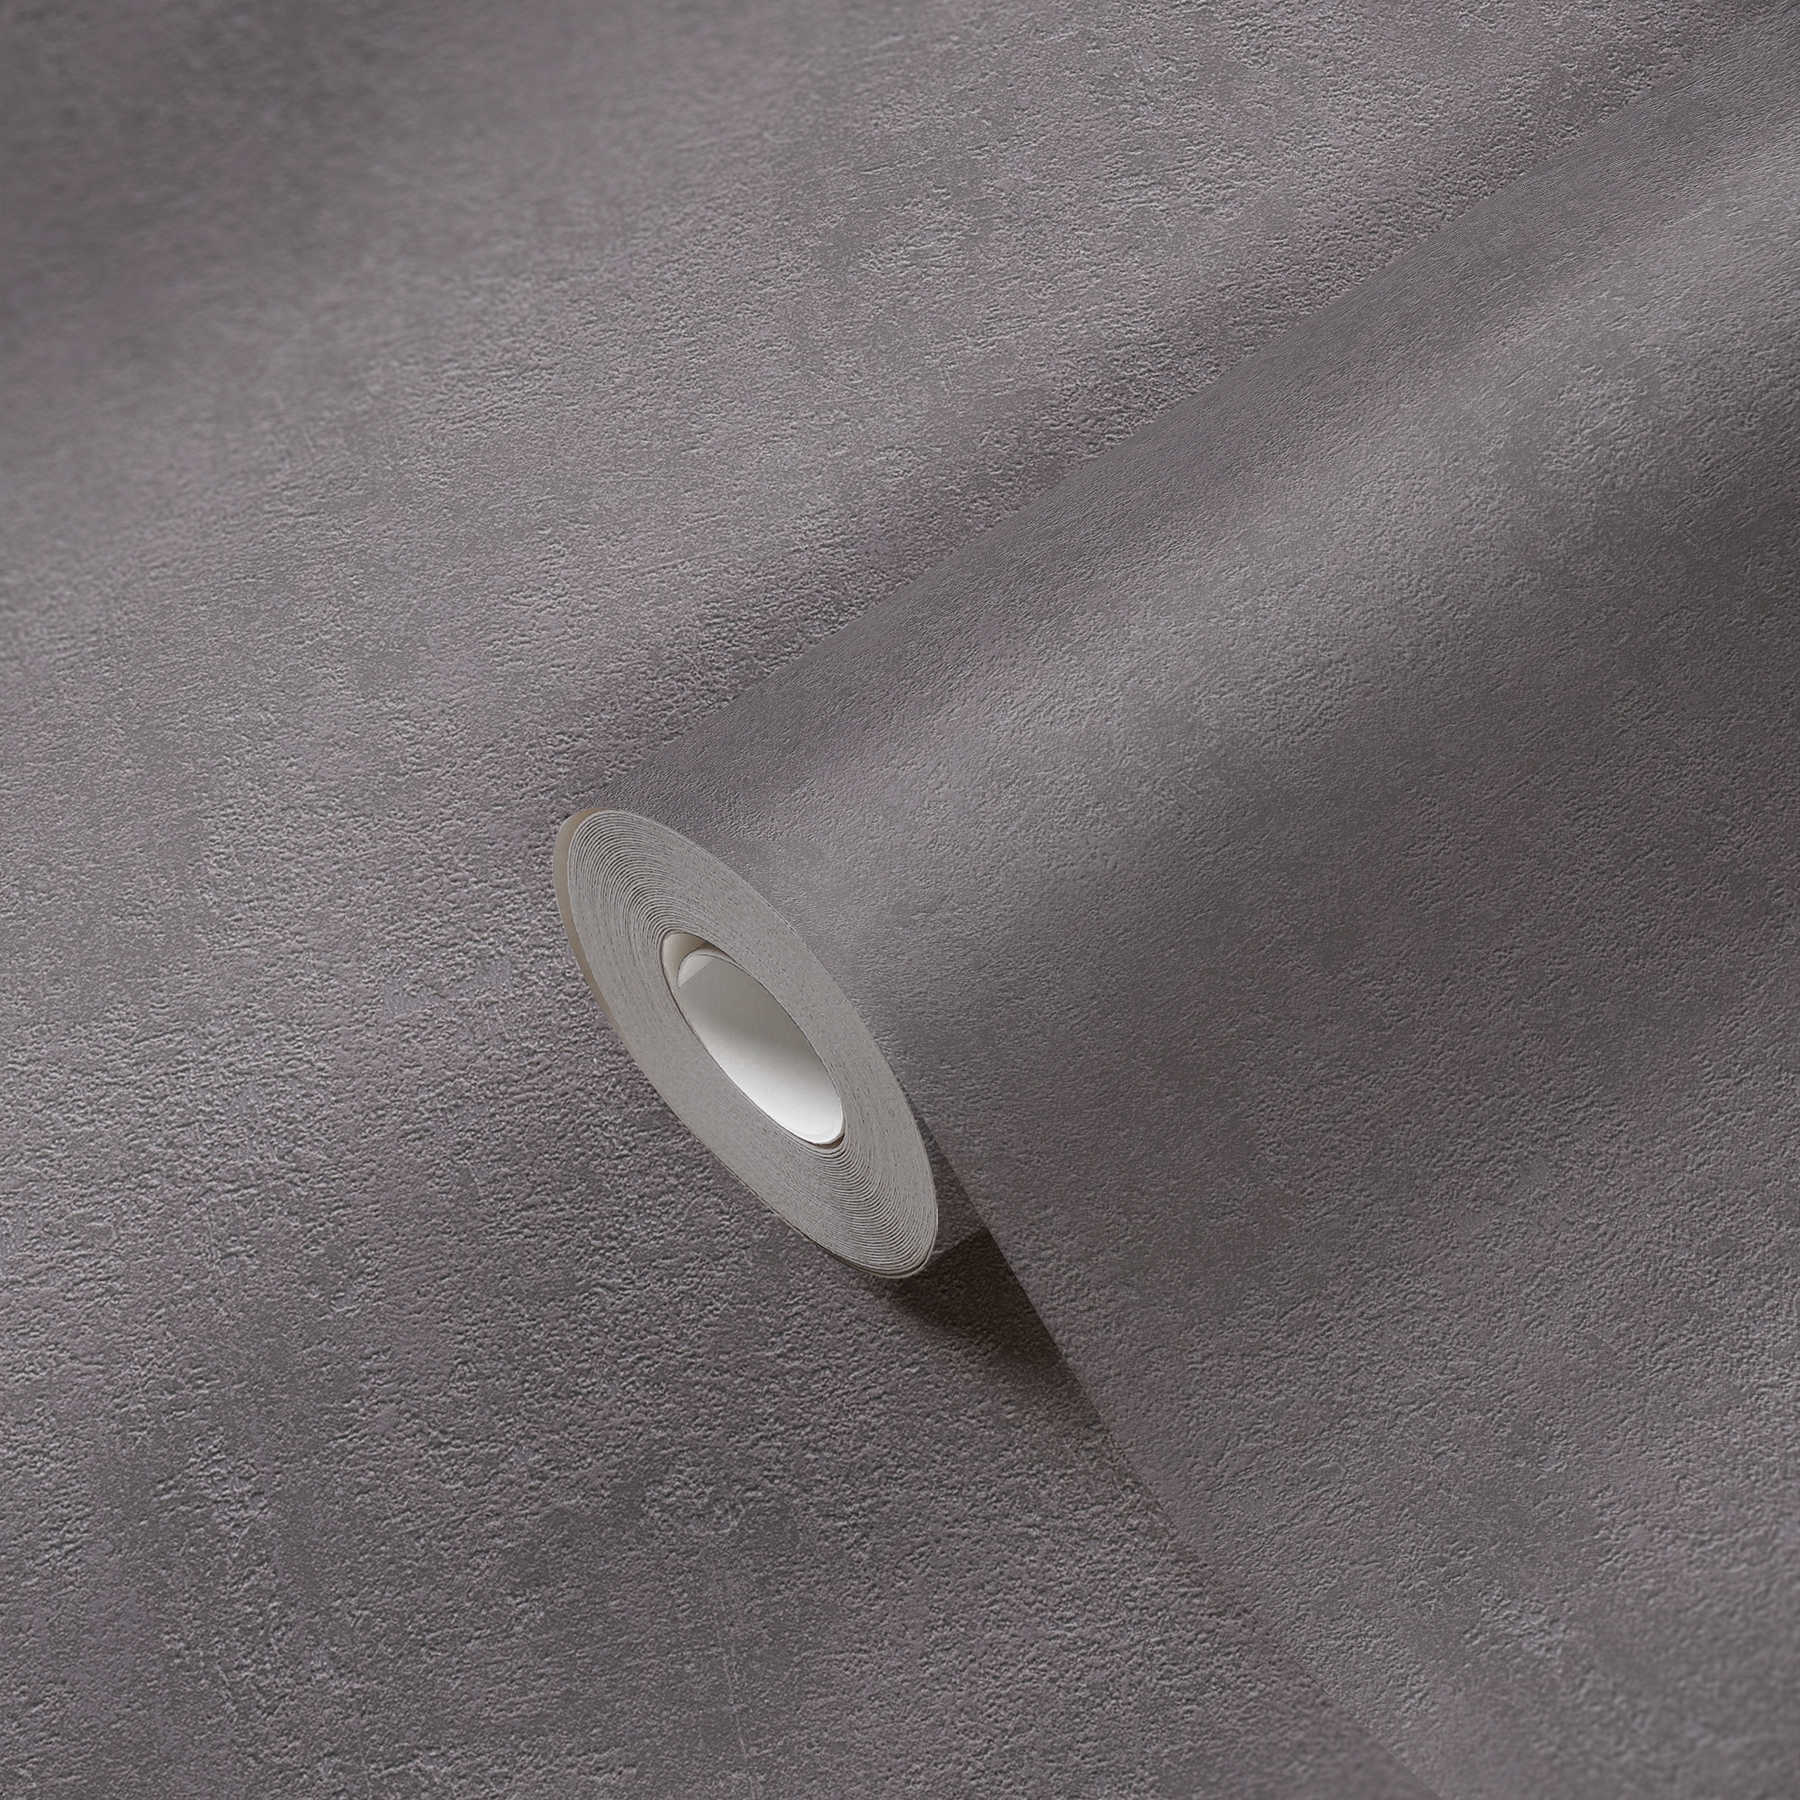             Wallpaper plaster structure, plain & satin - dark grey
        